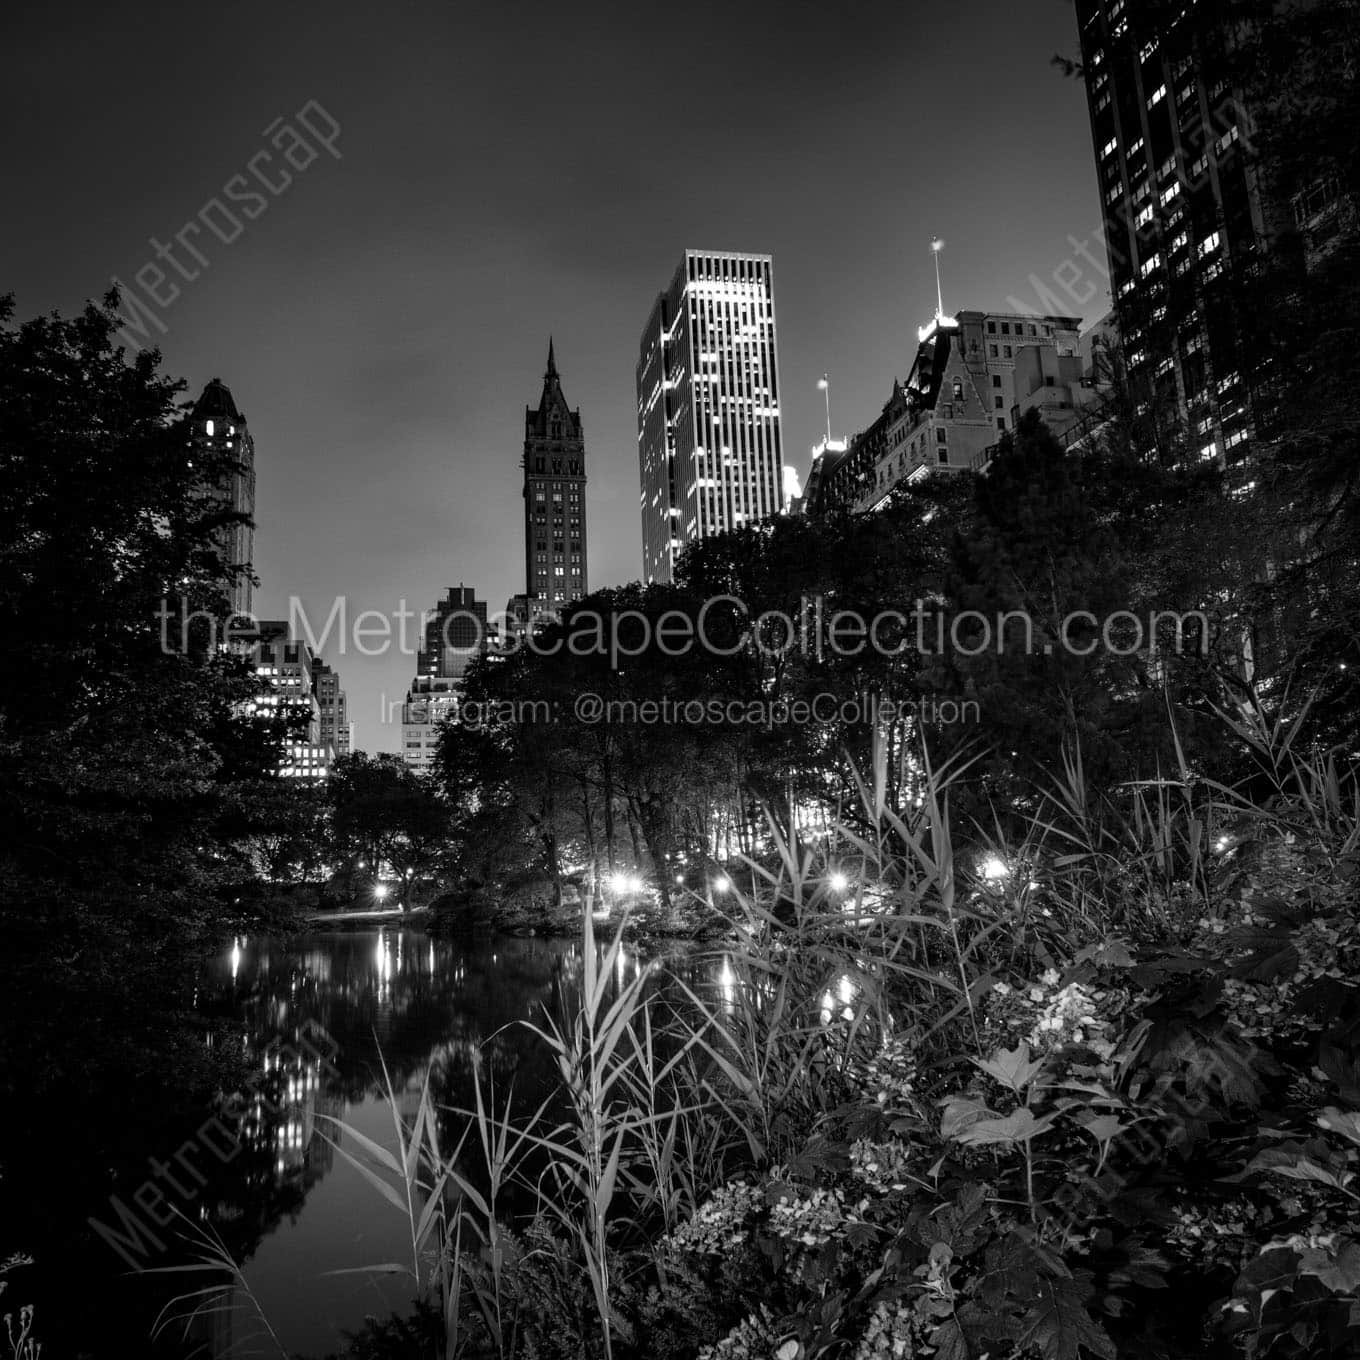 central park pond at night Black & White Office Art